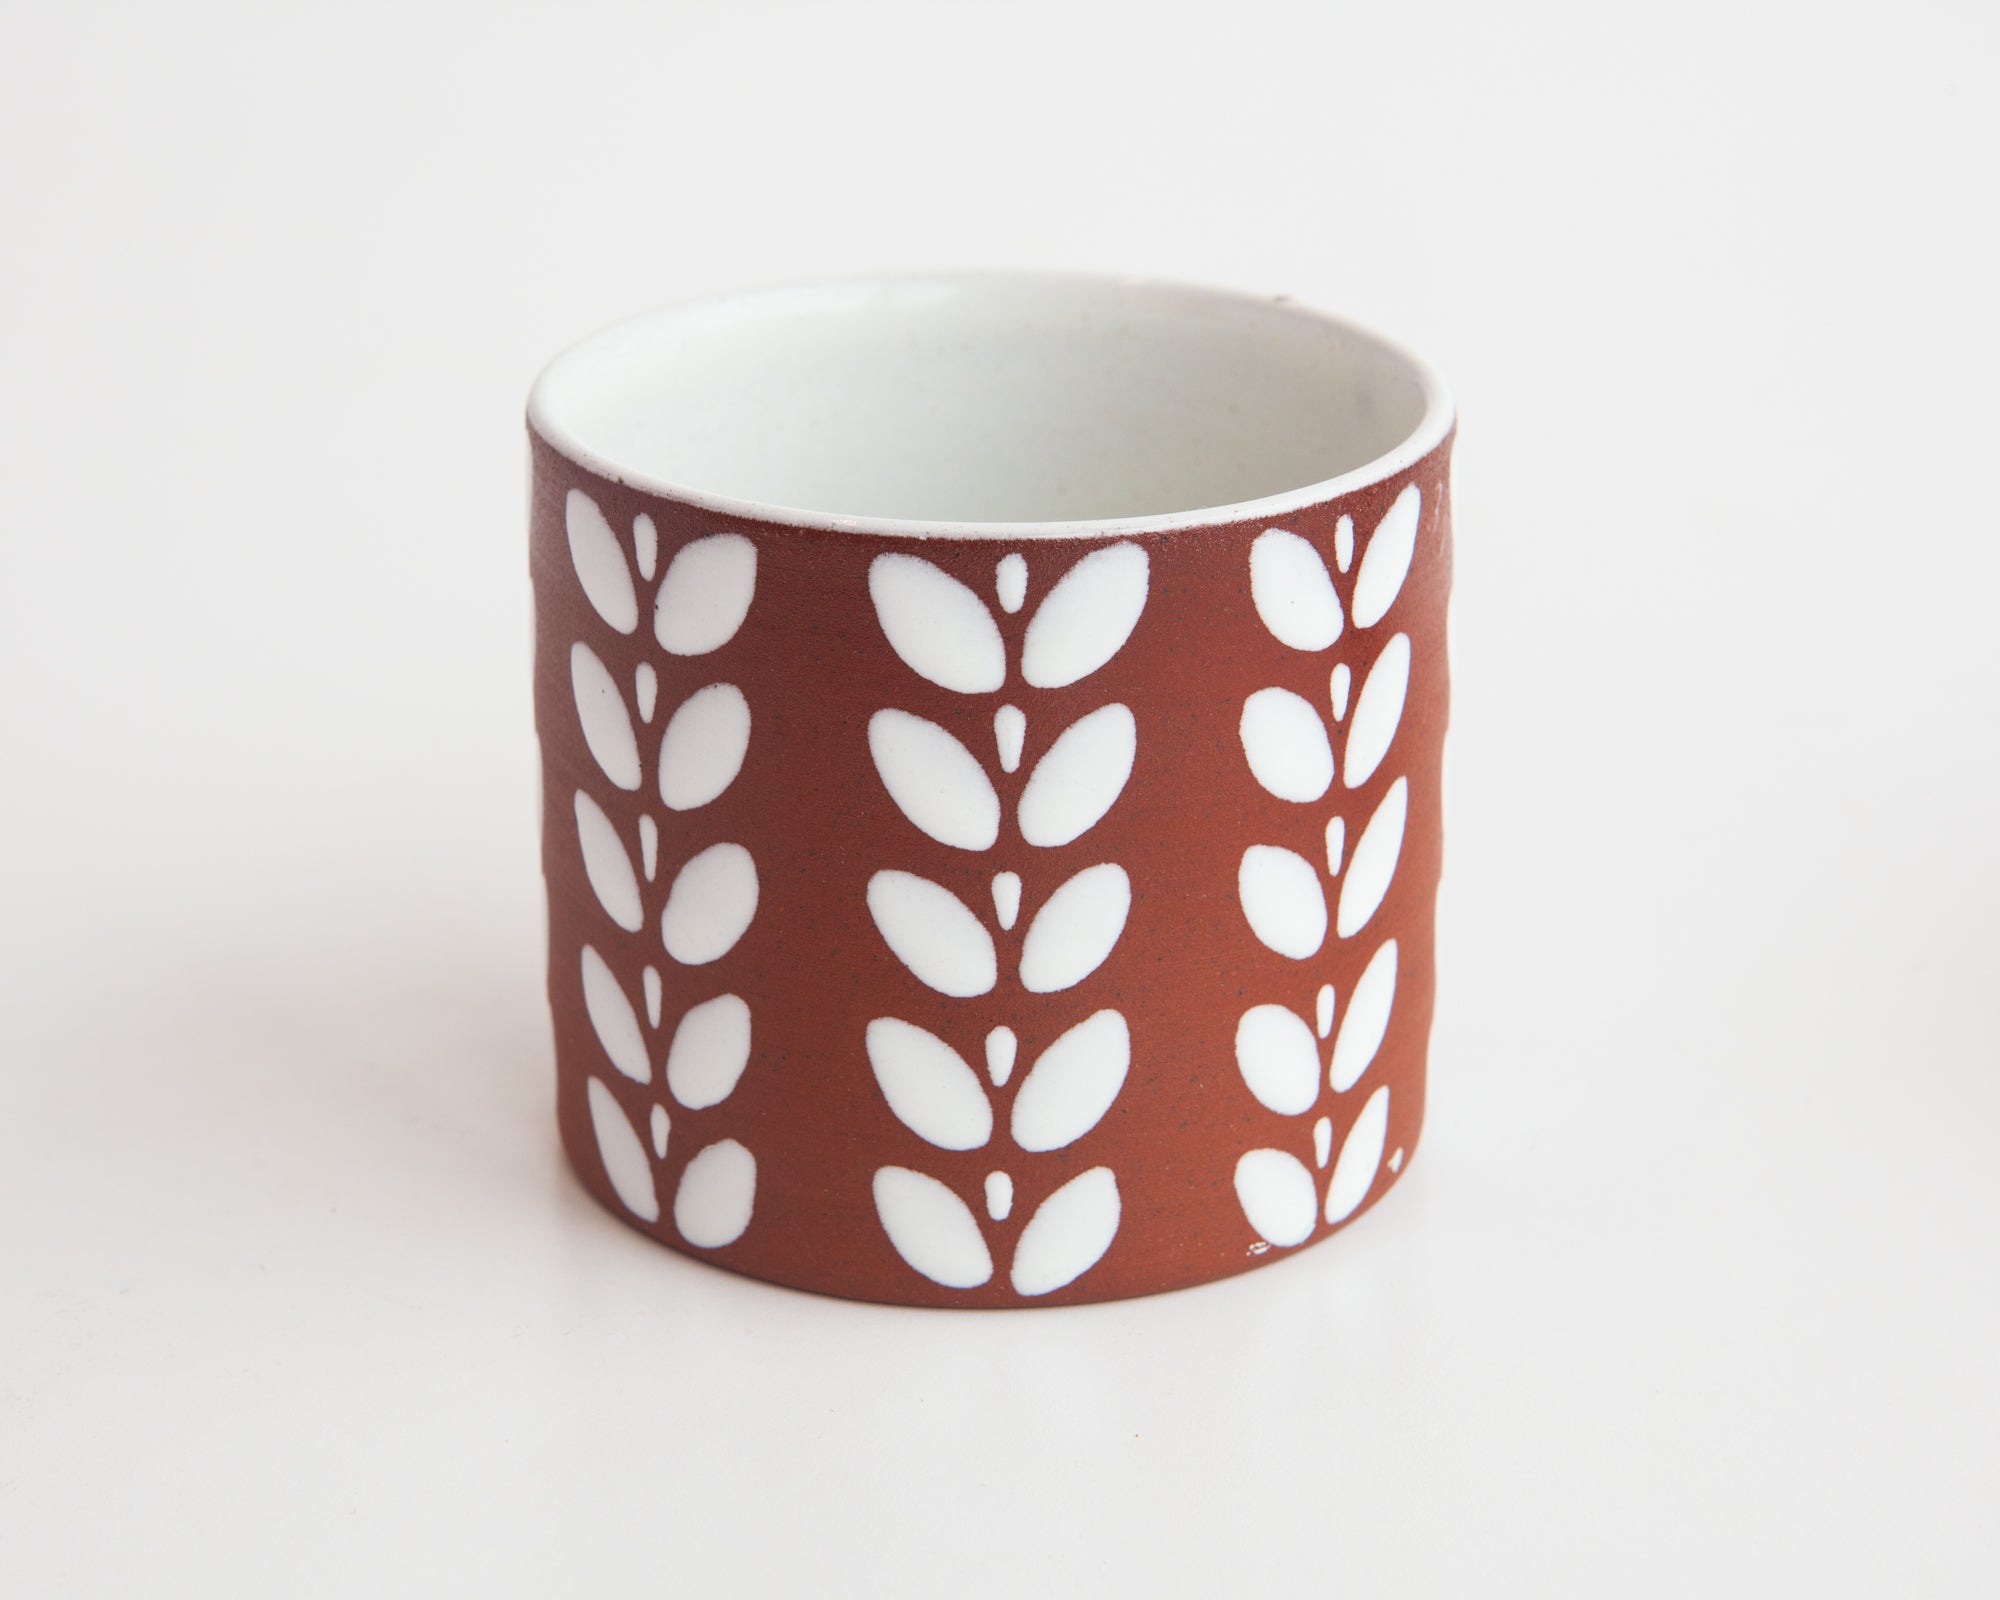 Decorated Leaf Pattern Vase by Joska Keramik